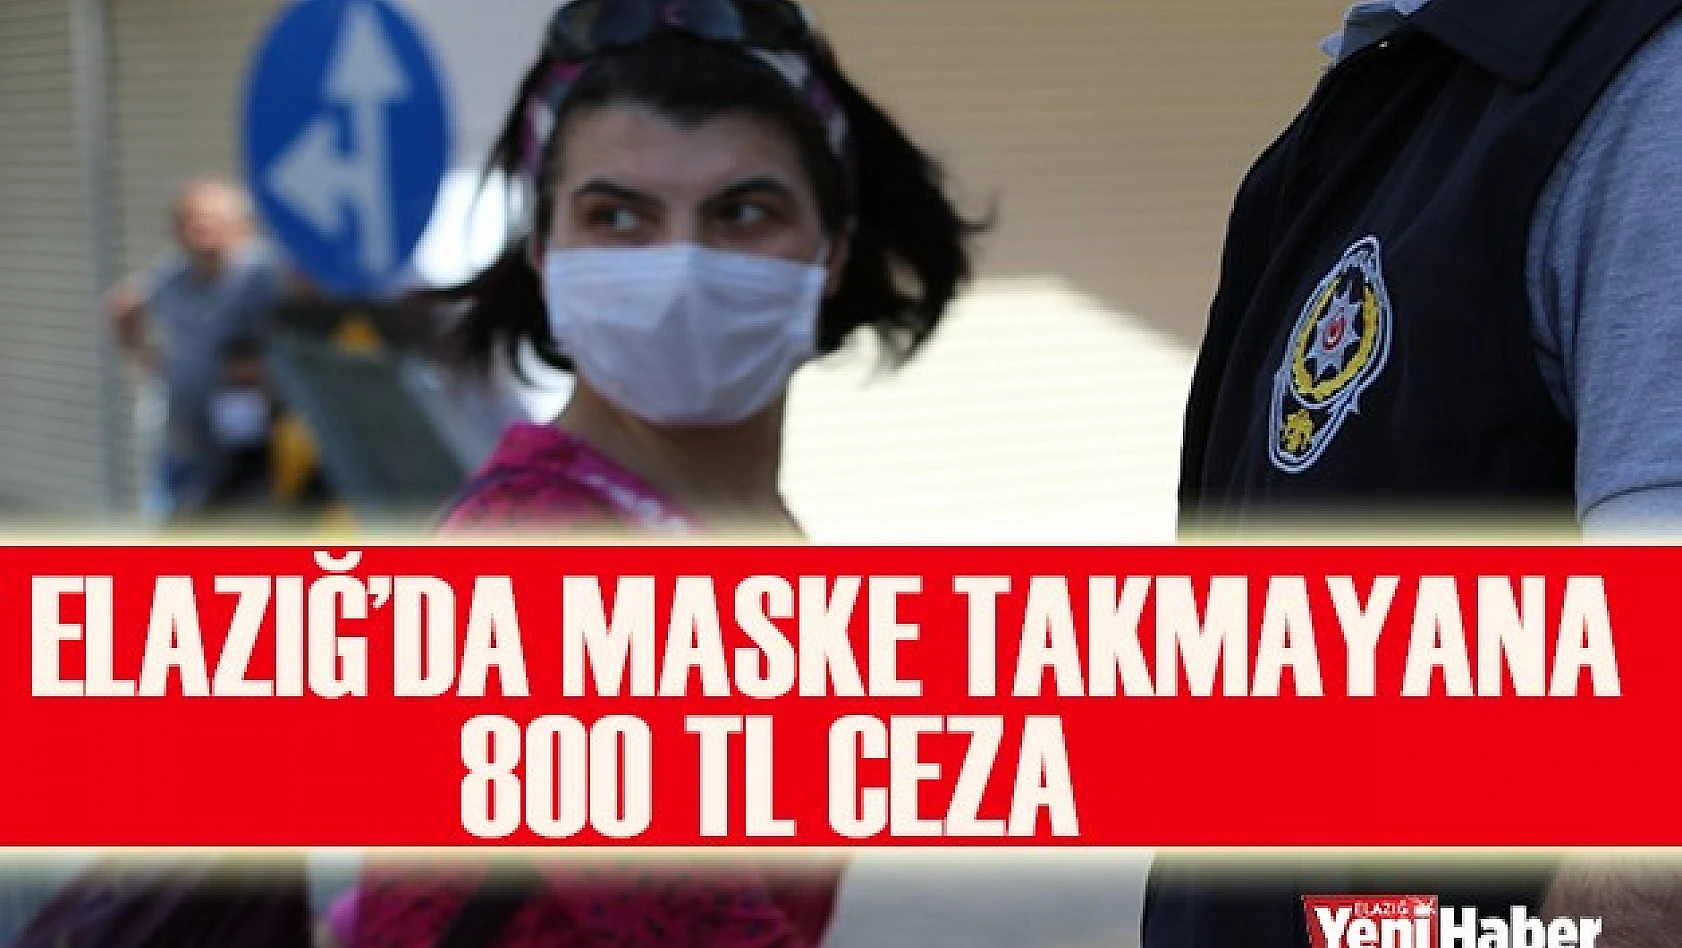 Maske Takmayana 800 TL Ceza